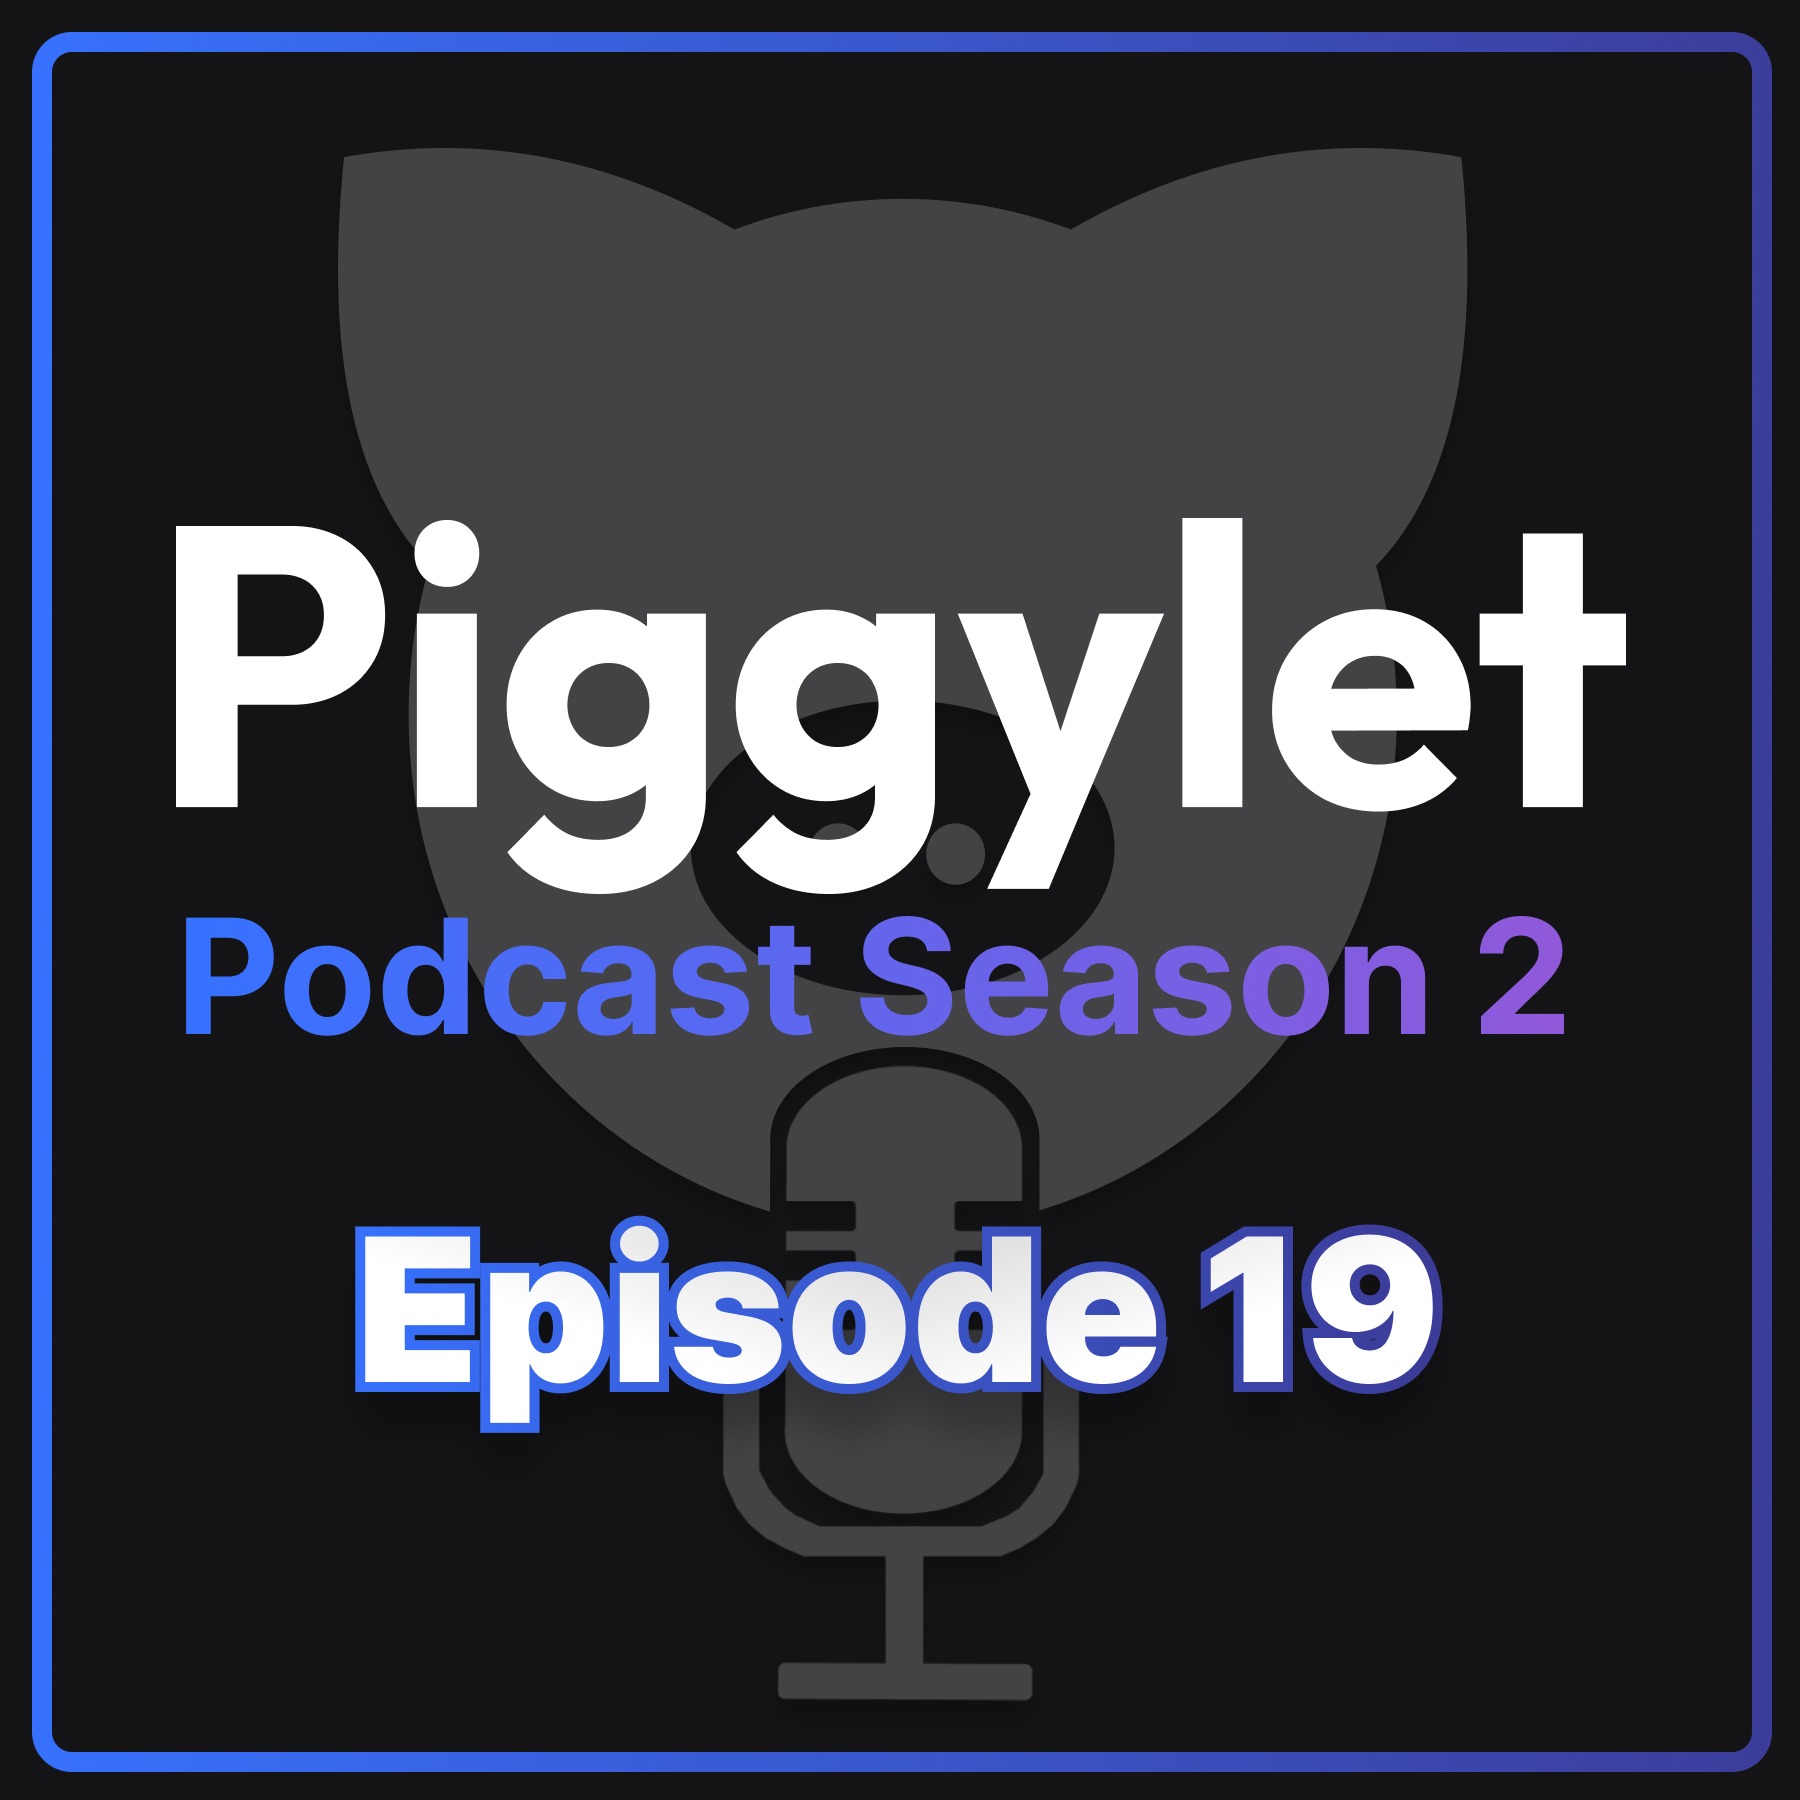 Piggylet Podcast Season 2: Episode 19